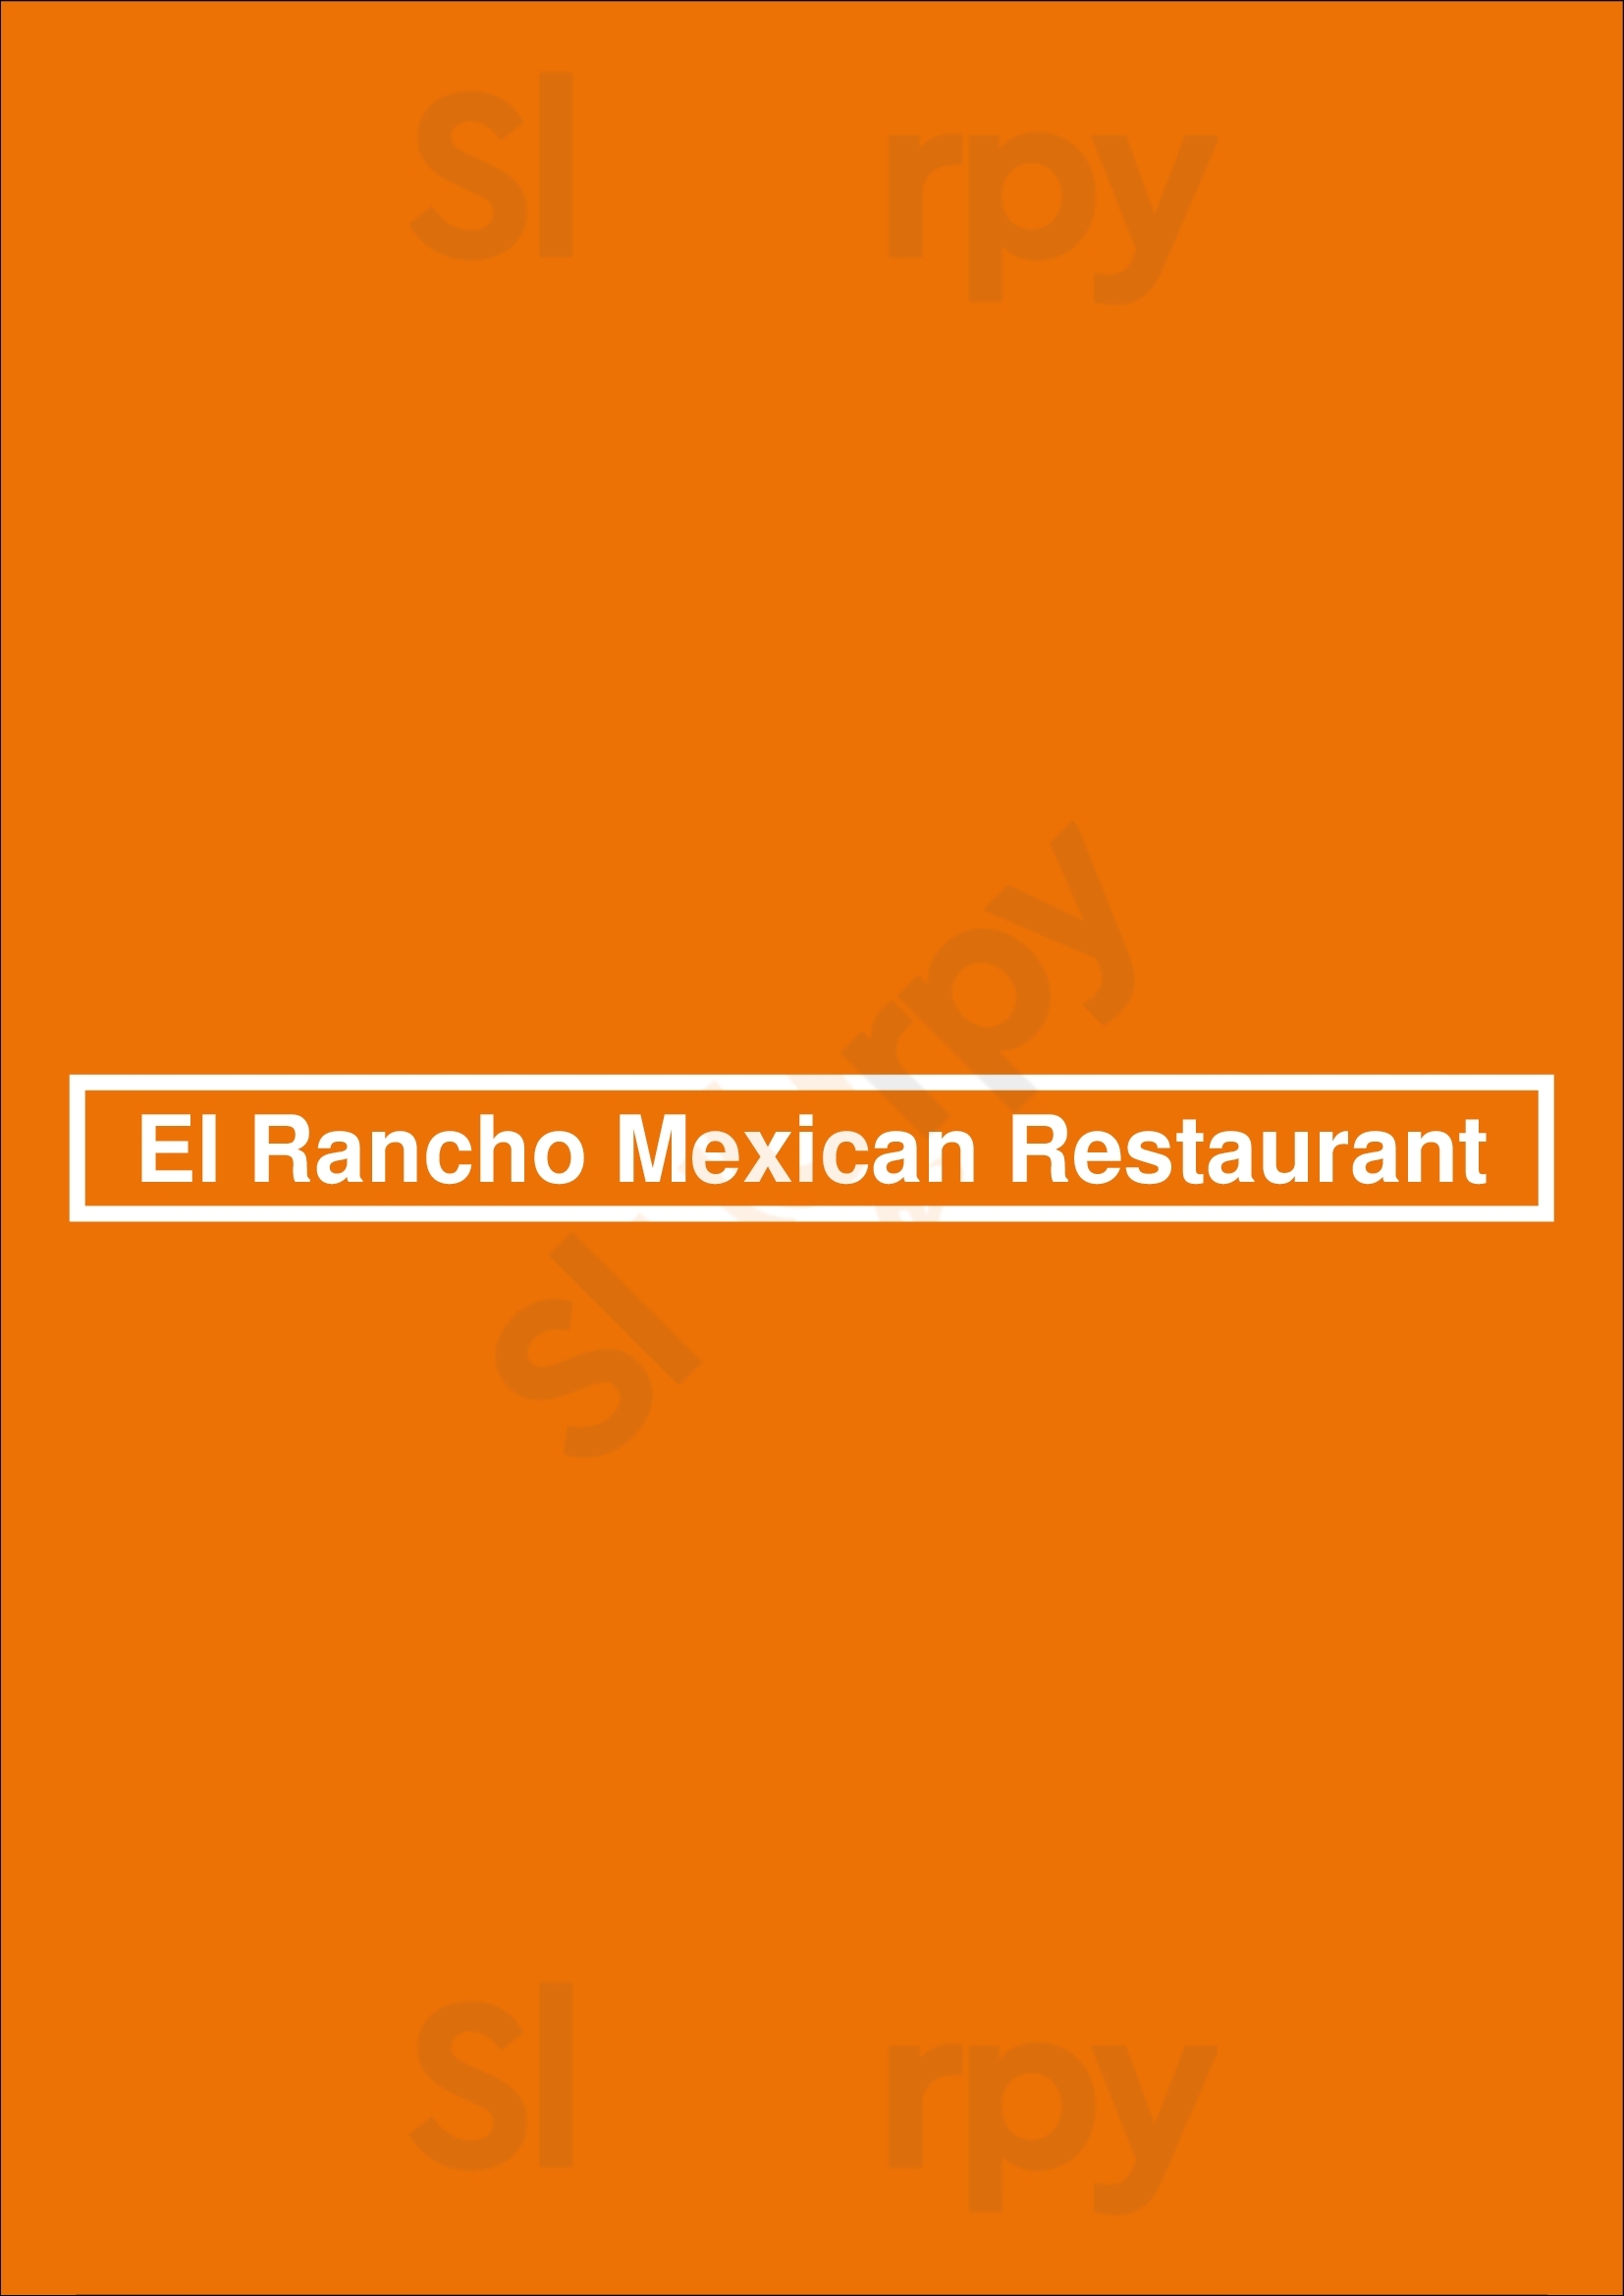 El Rancho Mexican Restaurant Houston Menu - 1